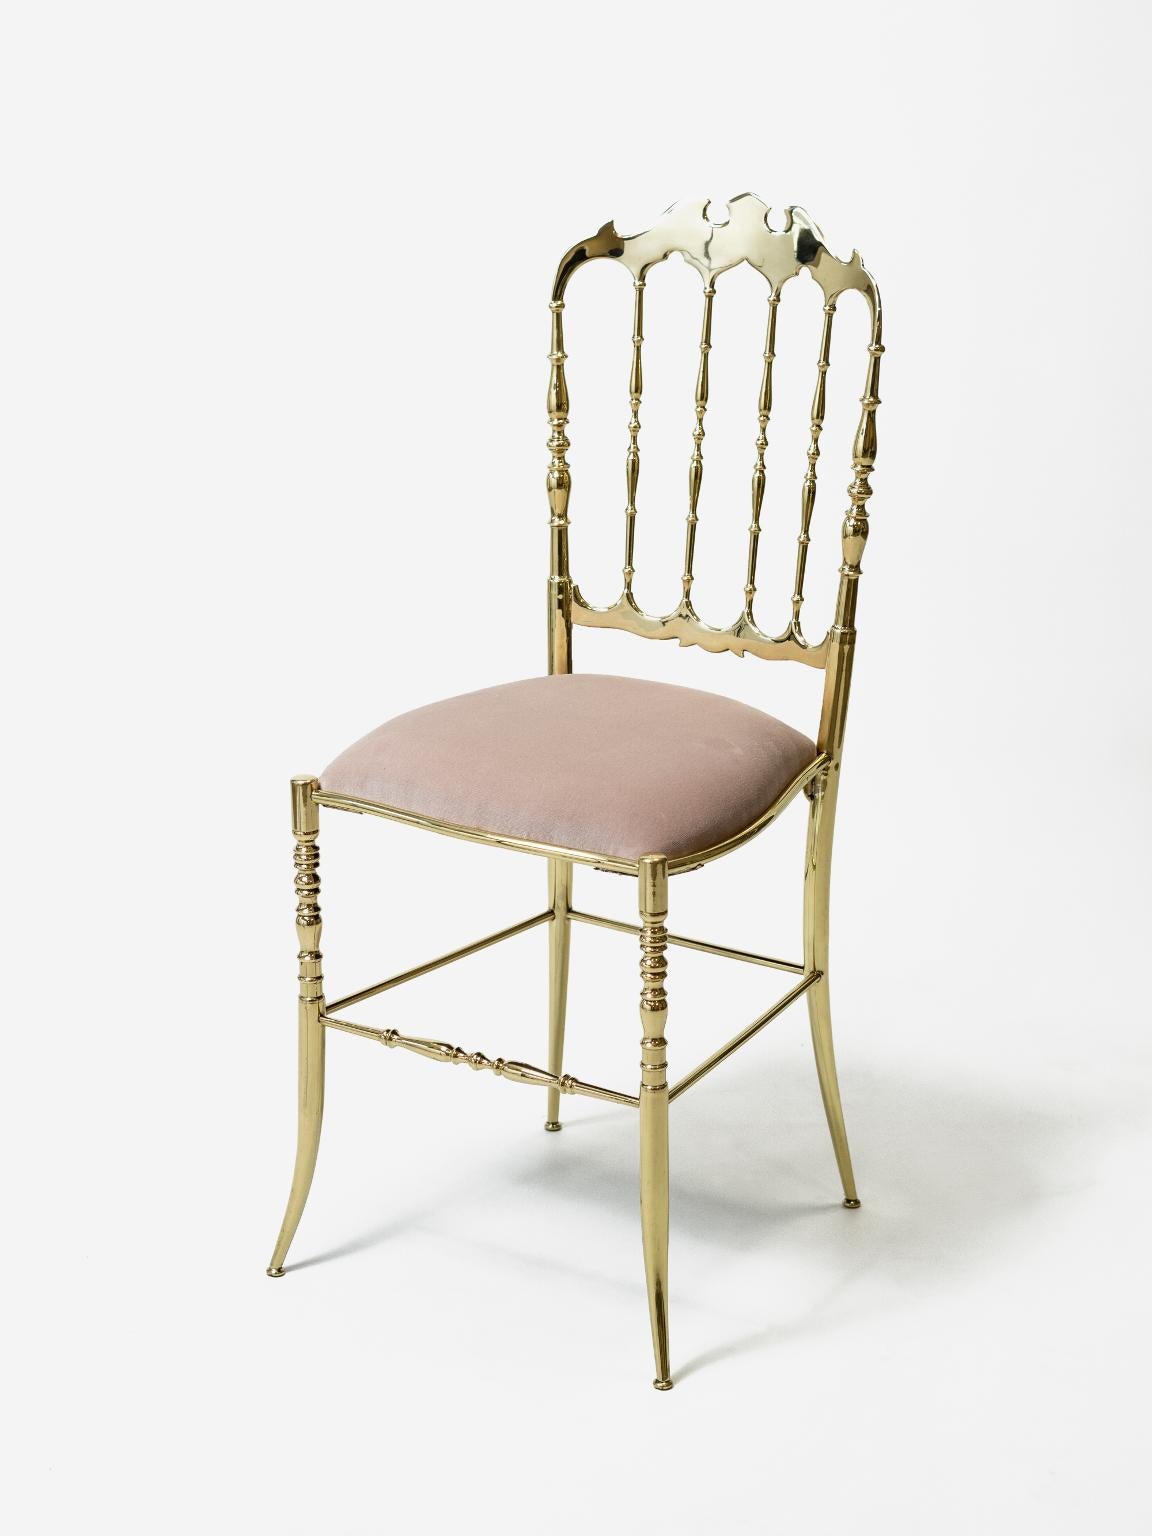 Chiavarina in ottone, Italian production 1950-1959
Chiavari-brass-chair.